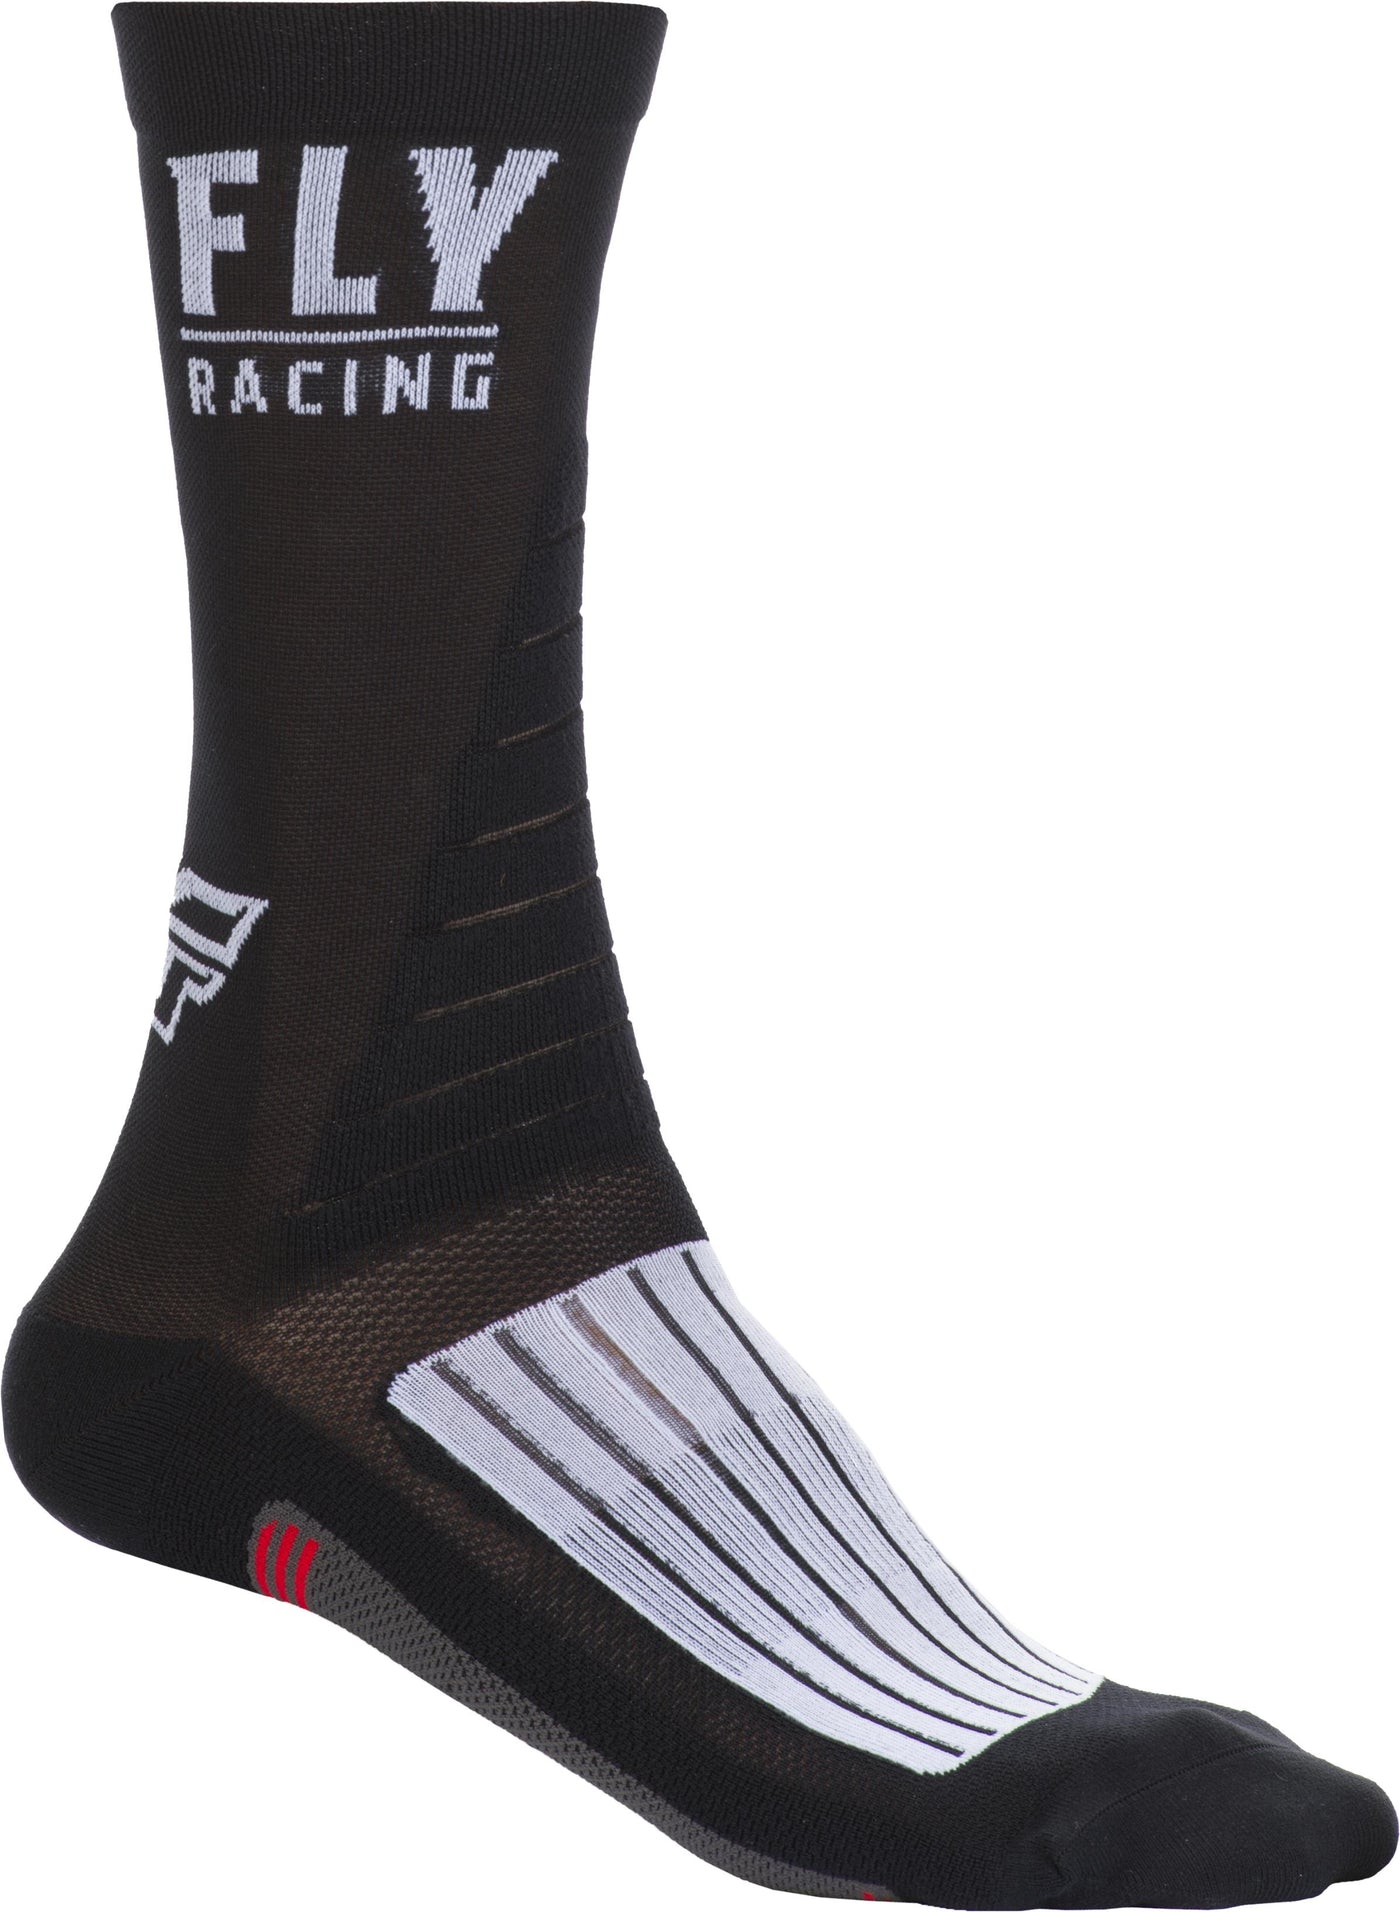 Fly Factory Rider Socks Khaki/black/grey Sm/md